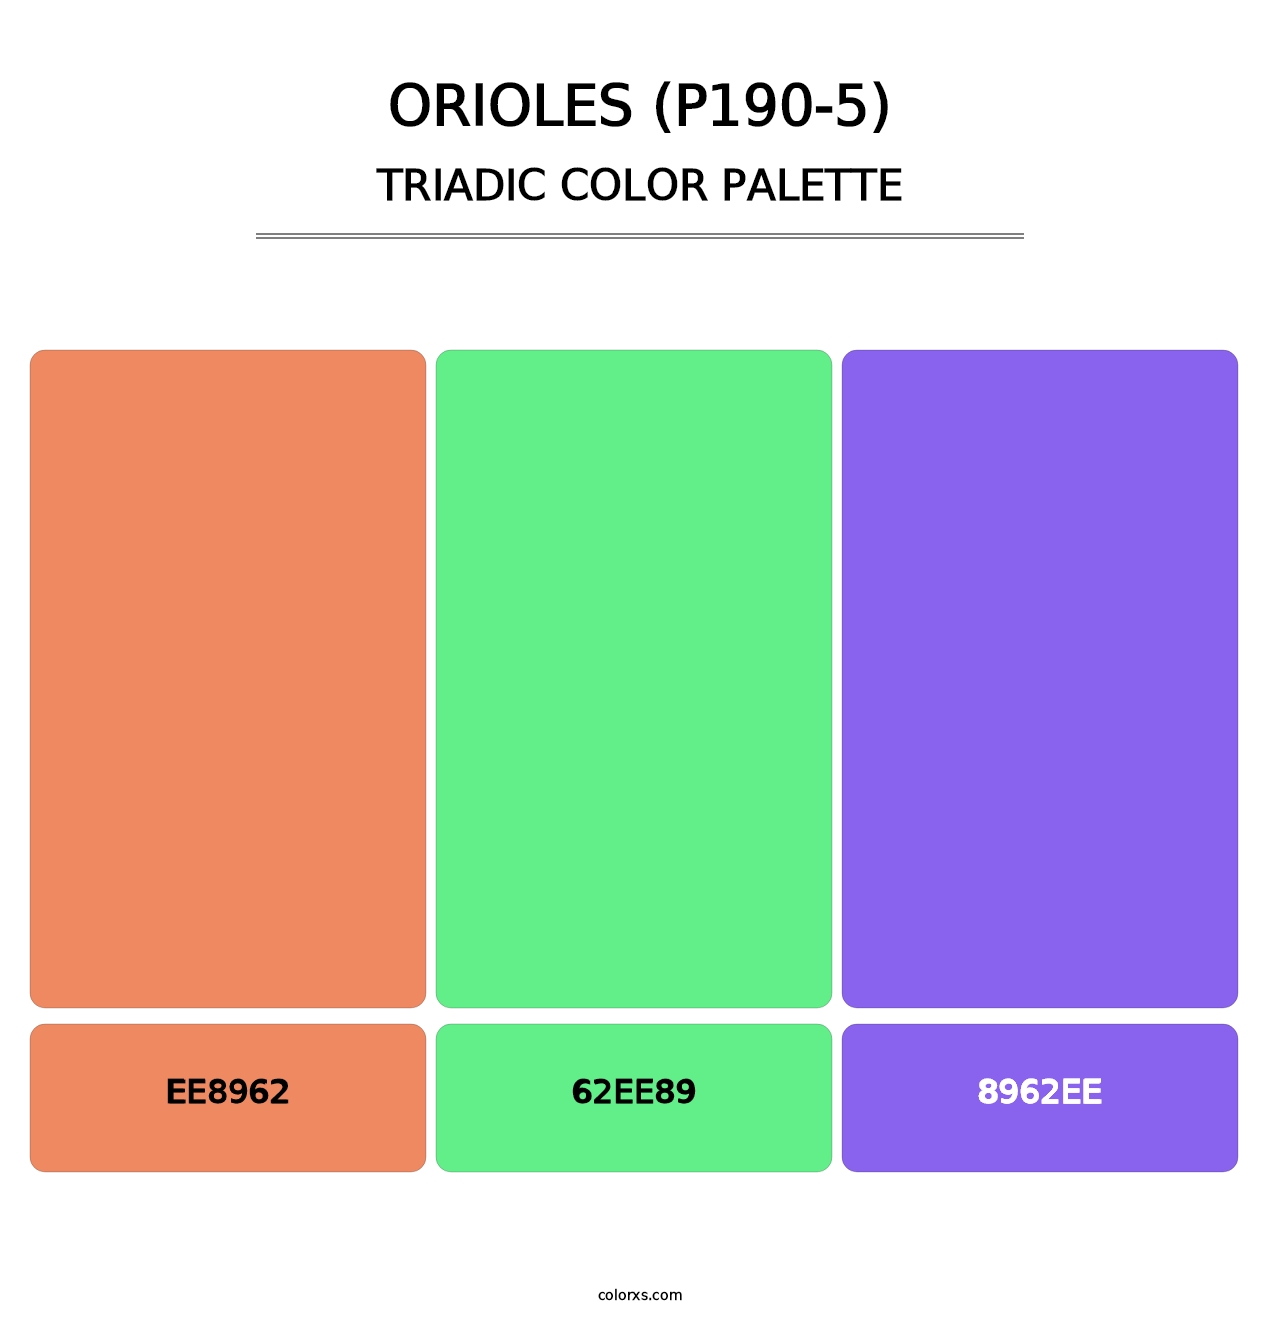 Orioles (P190-5) - Triadic Color Palette